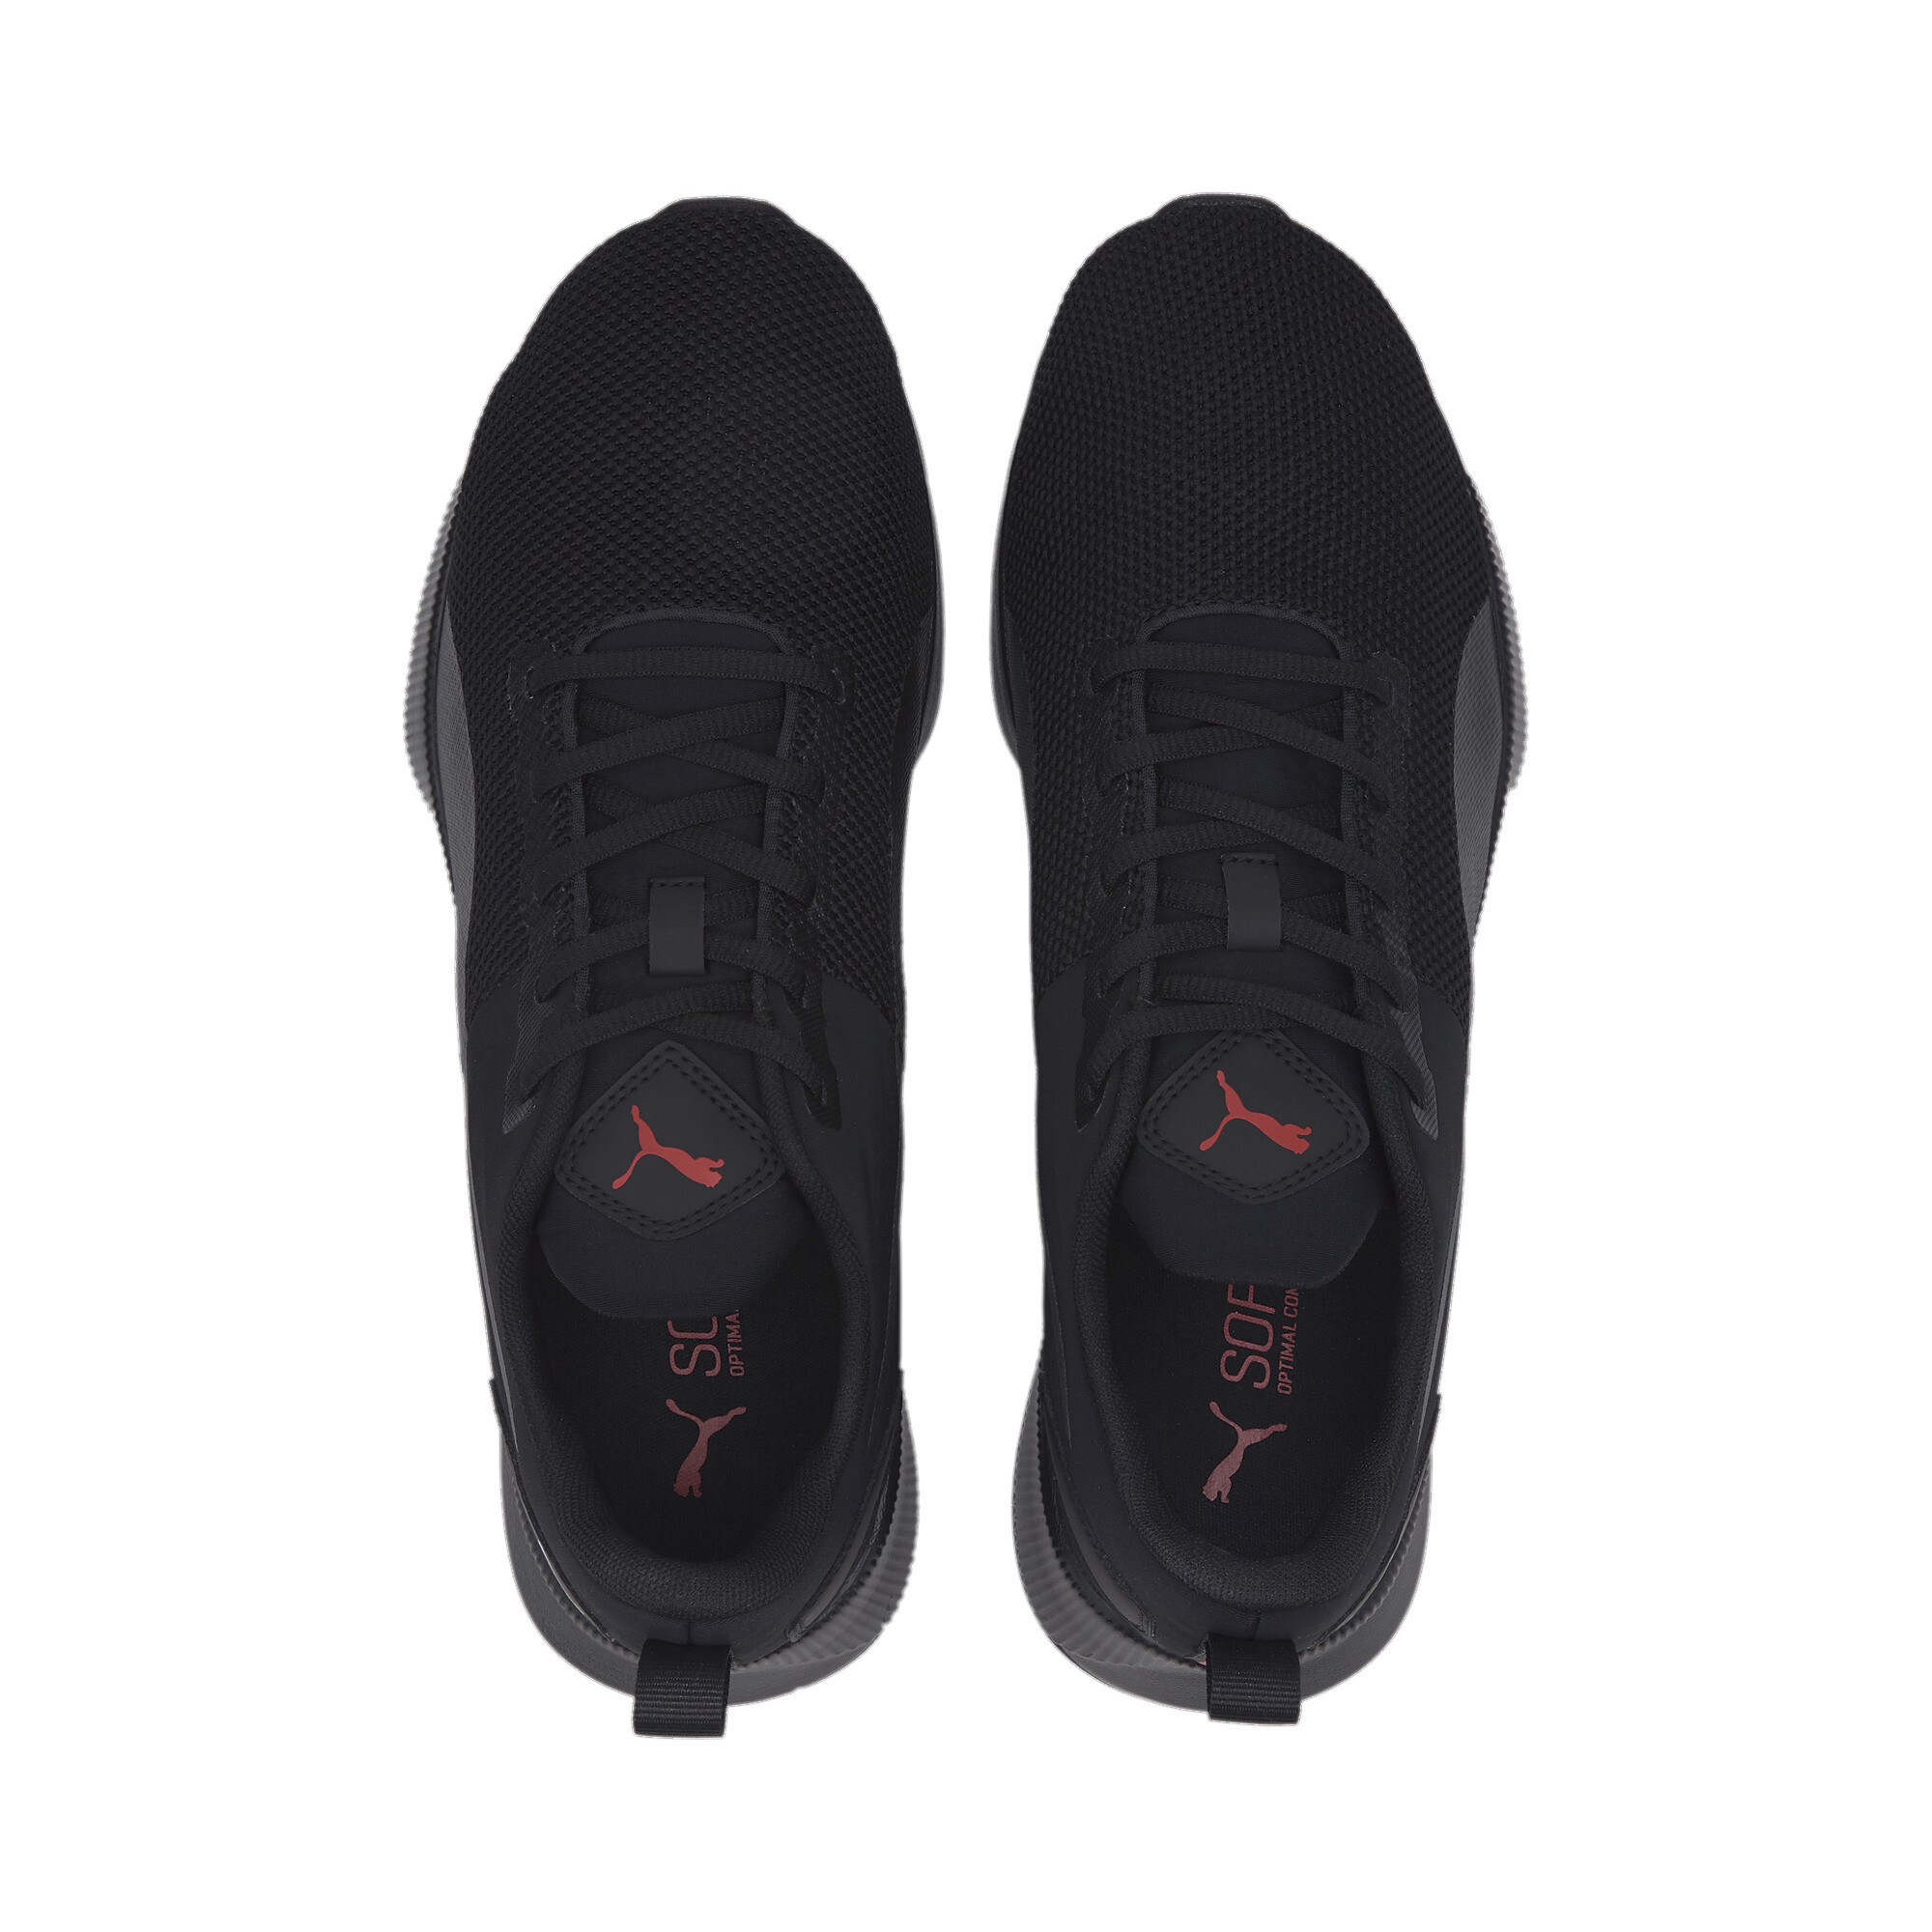 Men's PUMA Flyer Running Shoes In Black, Size EU 40.5